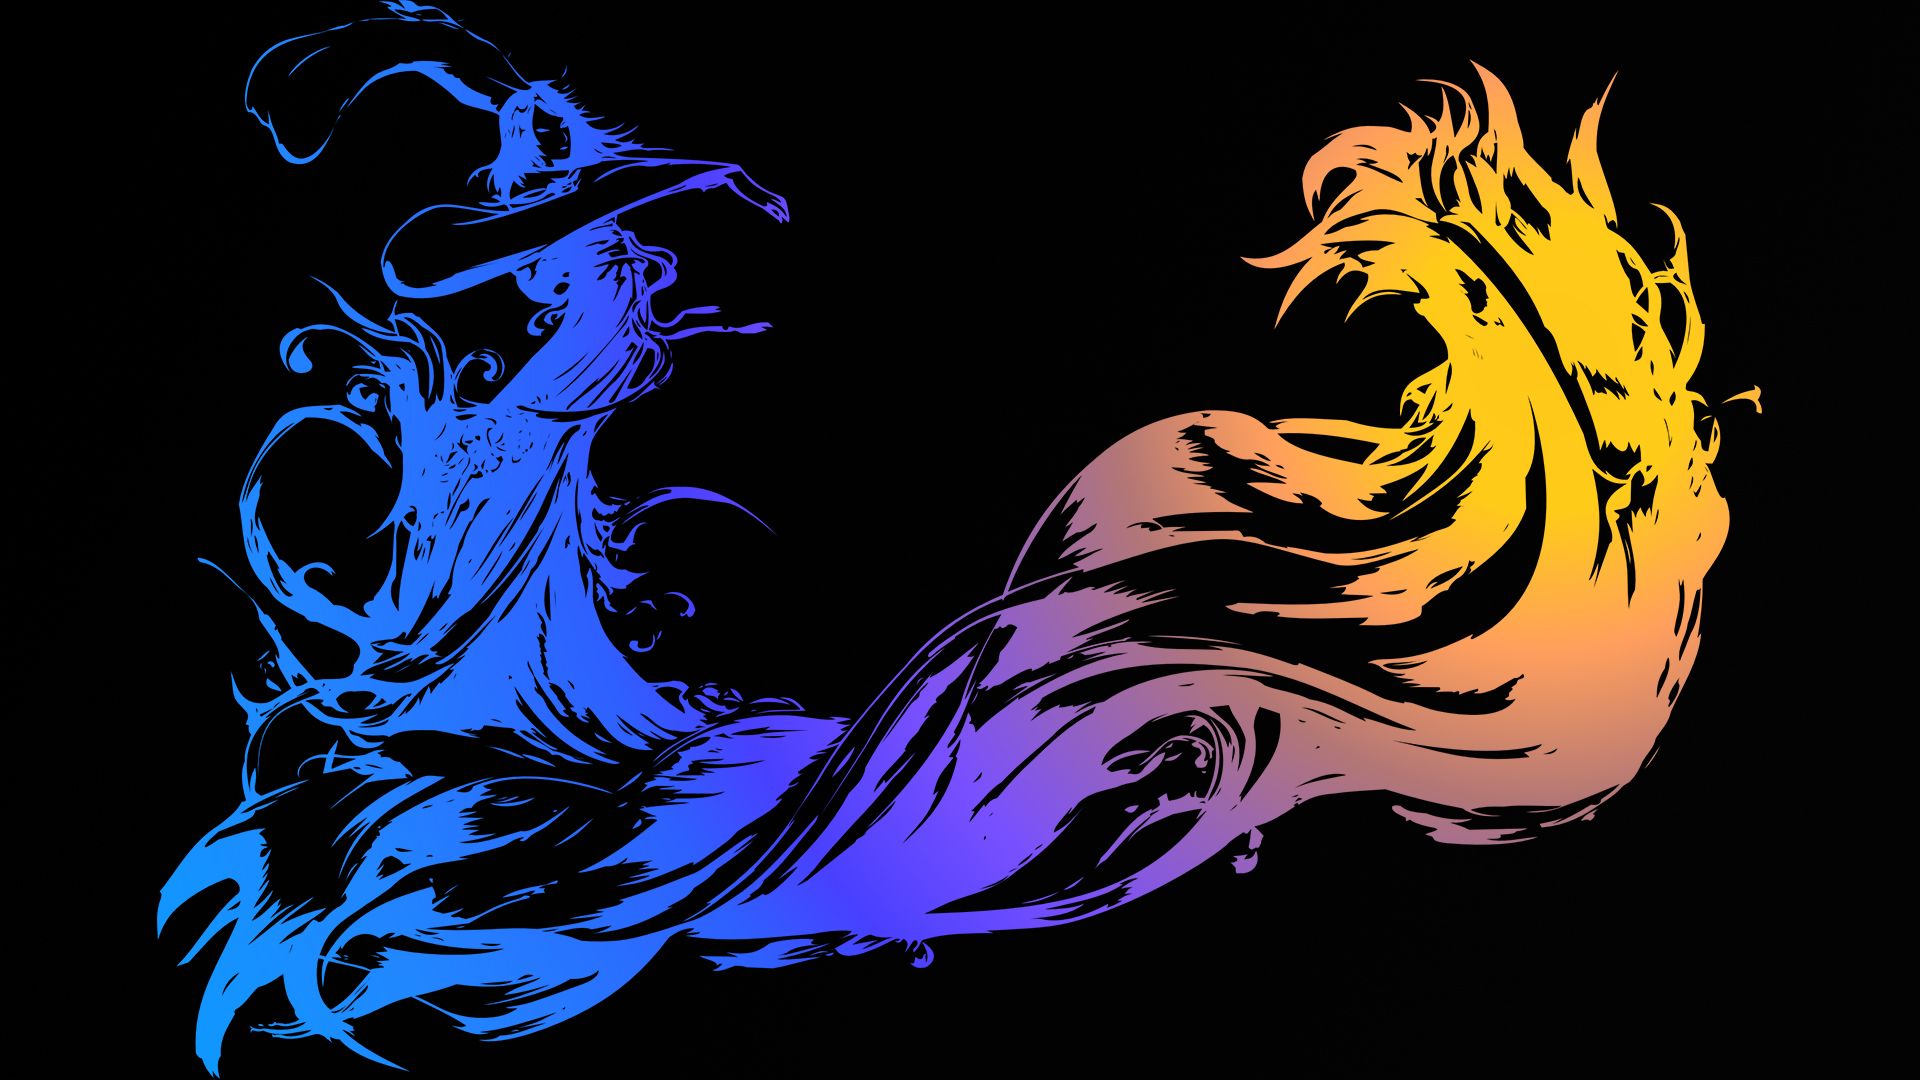 Final Fantasy X Background Image